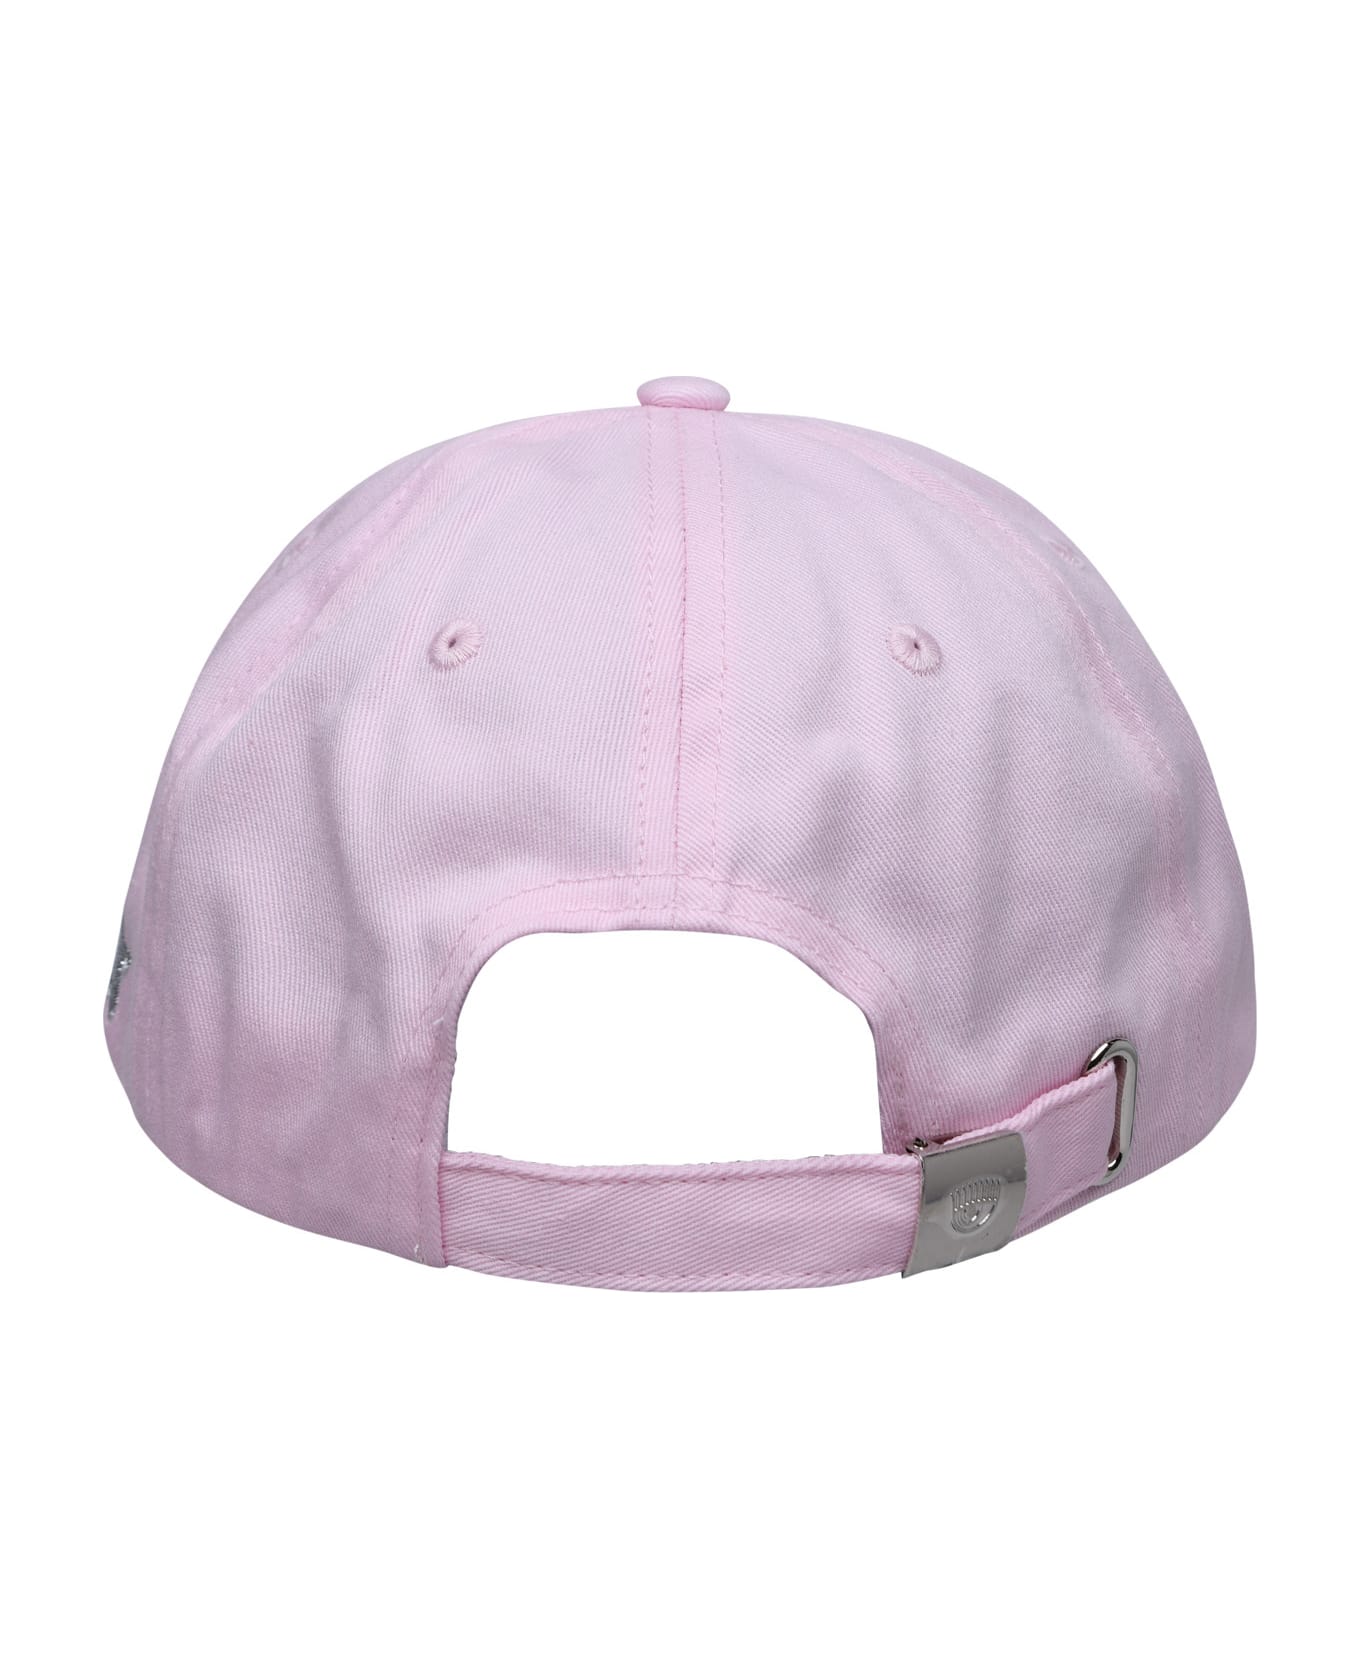 Chiara Ferragni Pink Cotton Hat - Pink